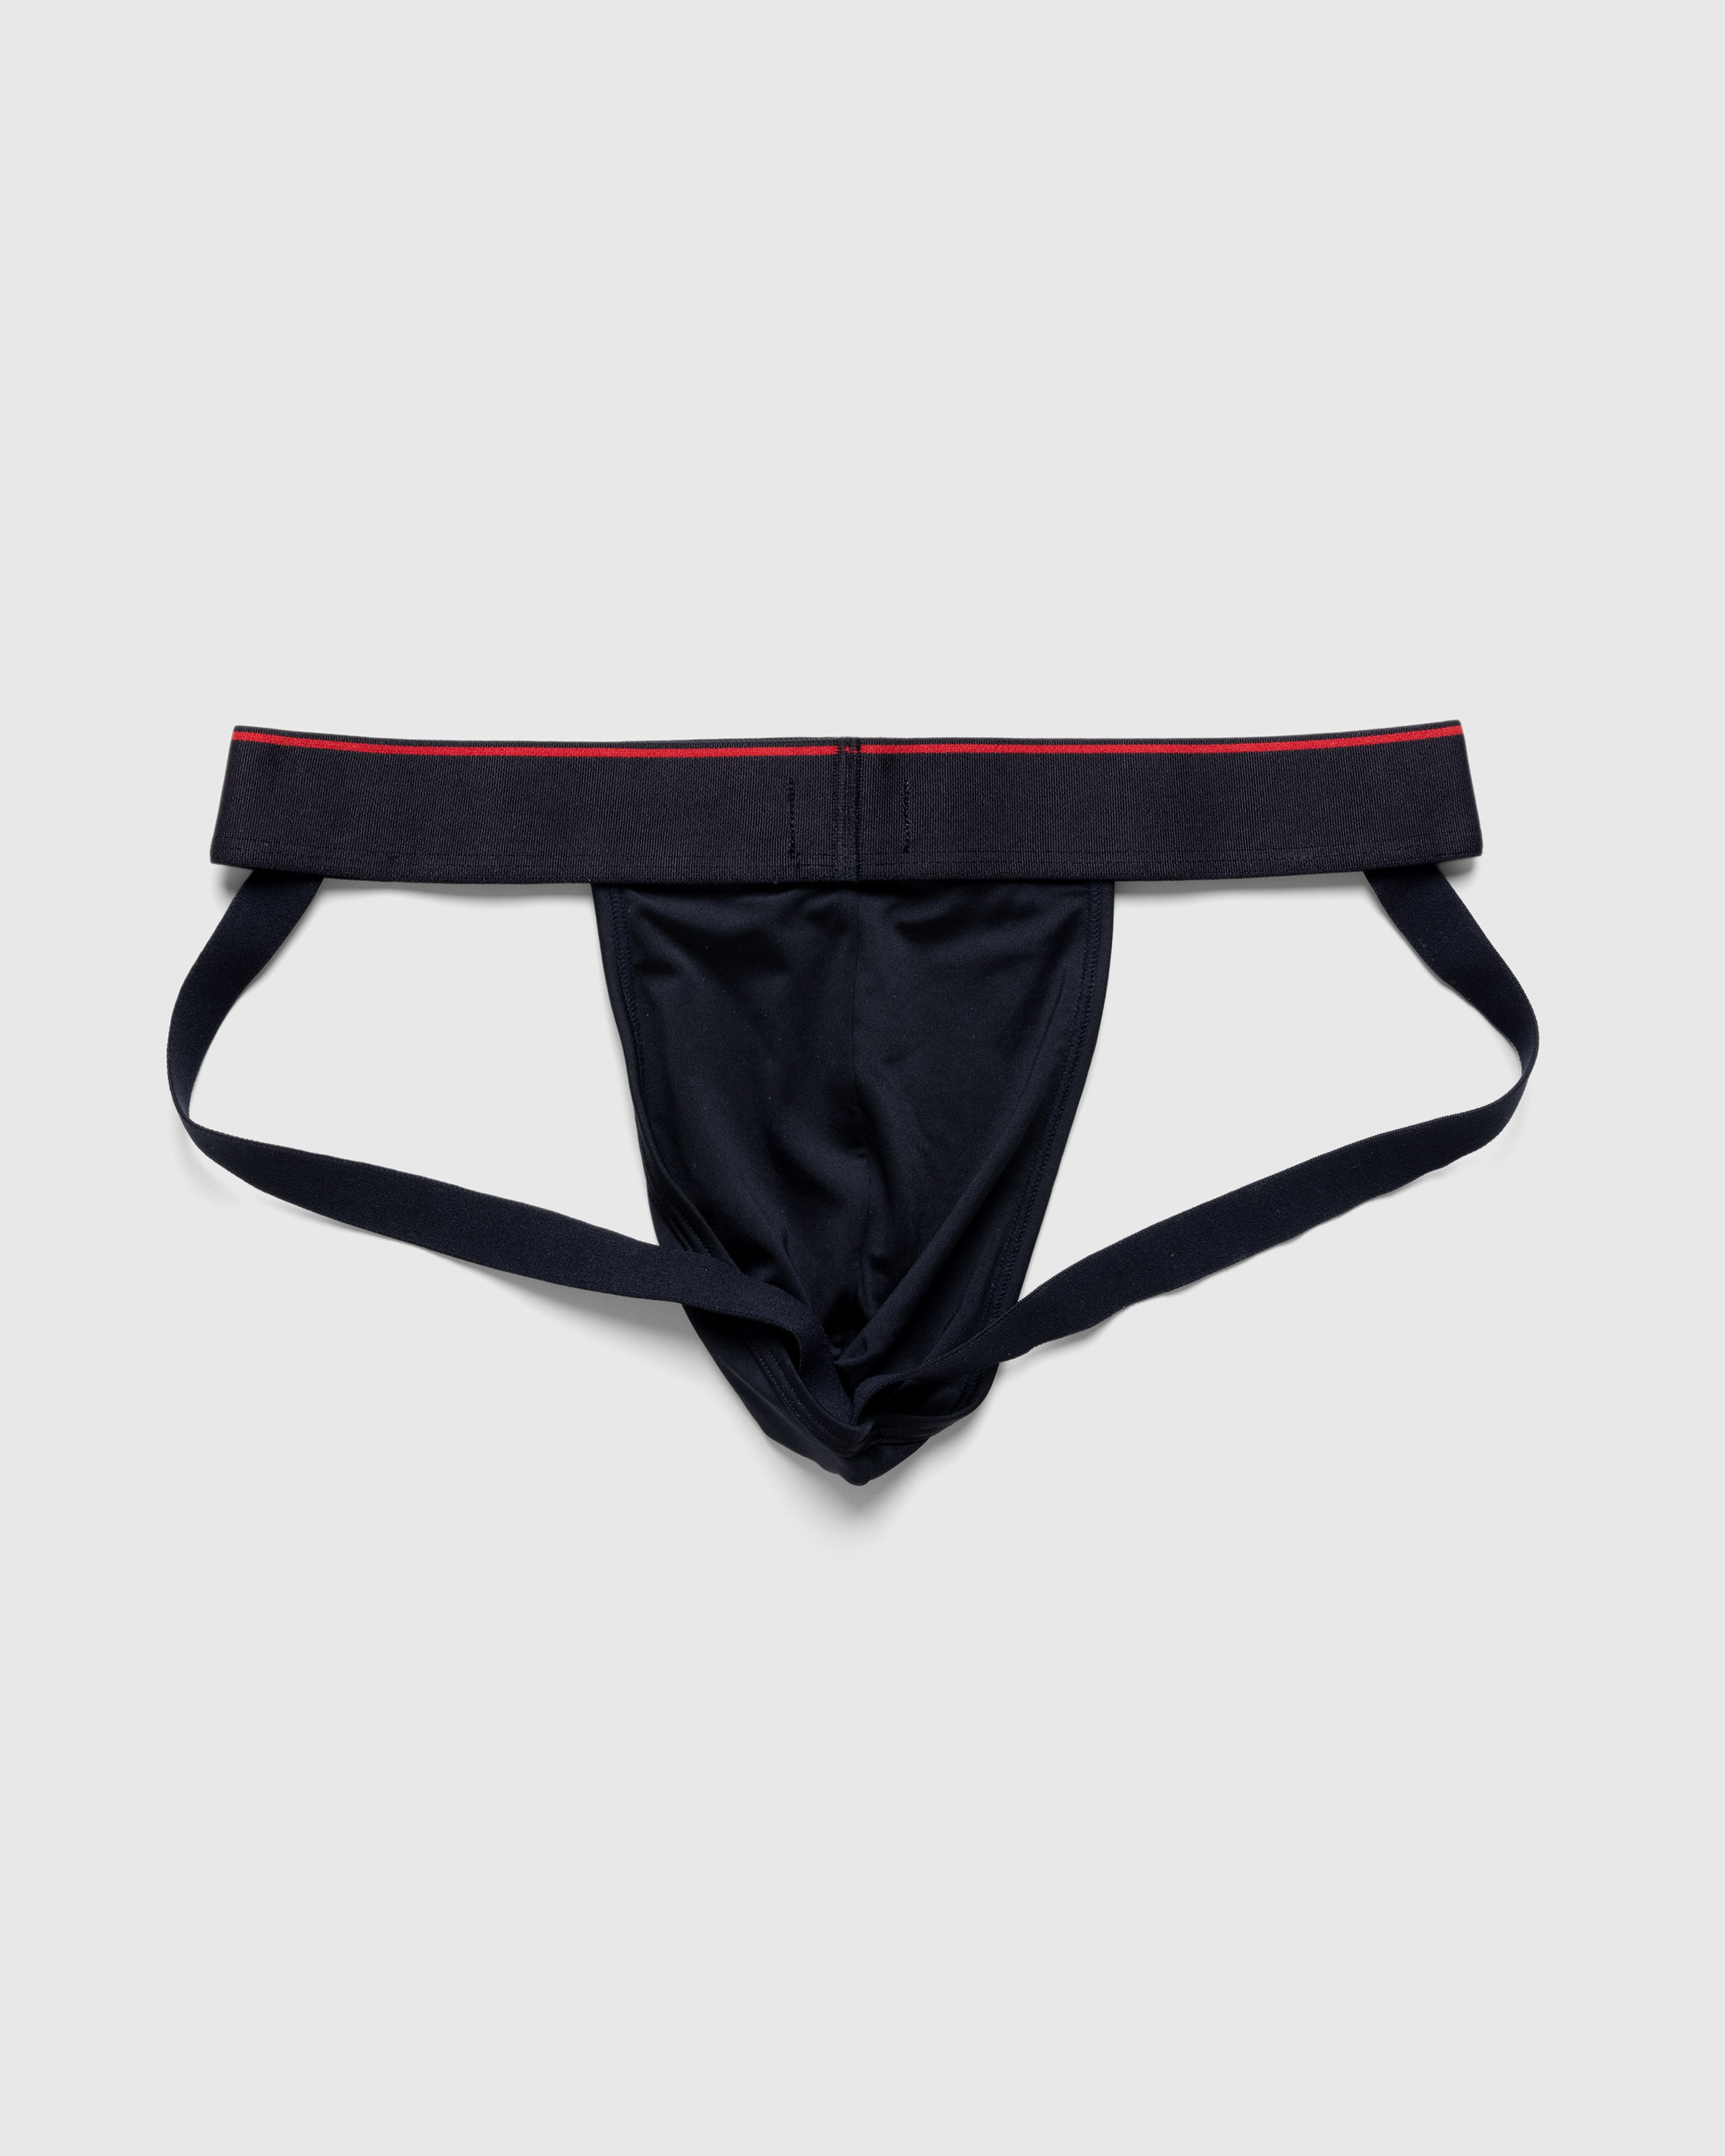 Diesel – Umbr-Jocky Black - Underwear & Loungewear - Black - Image 2